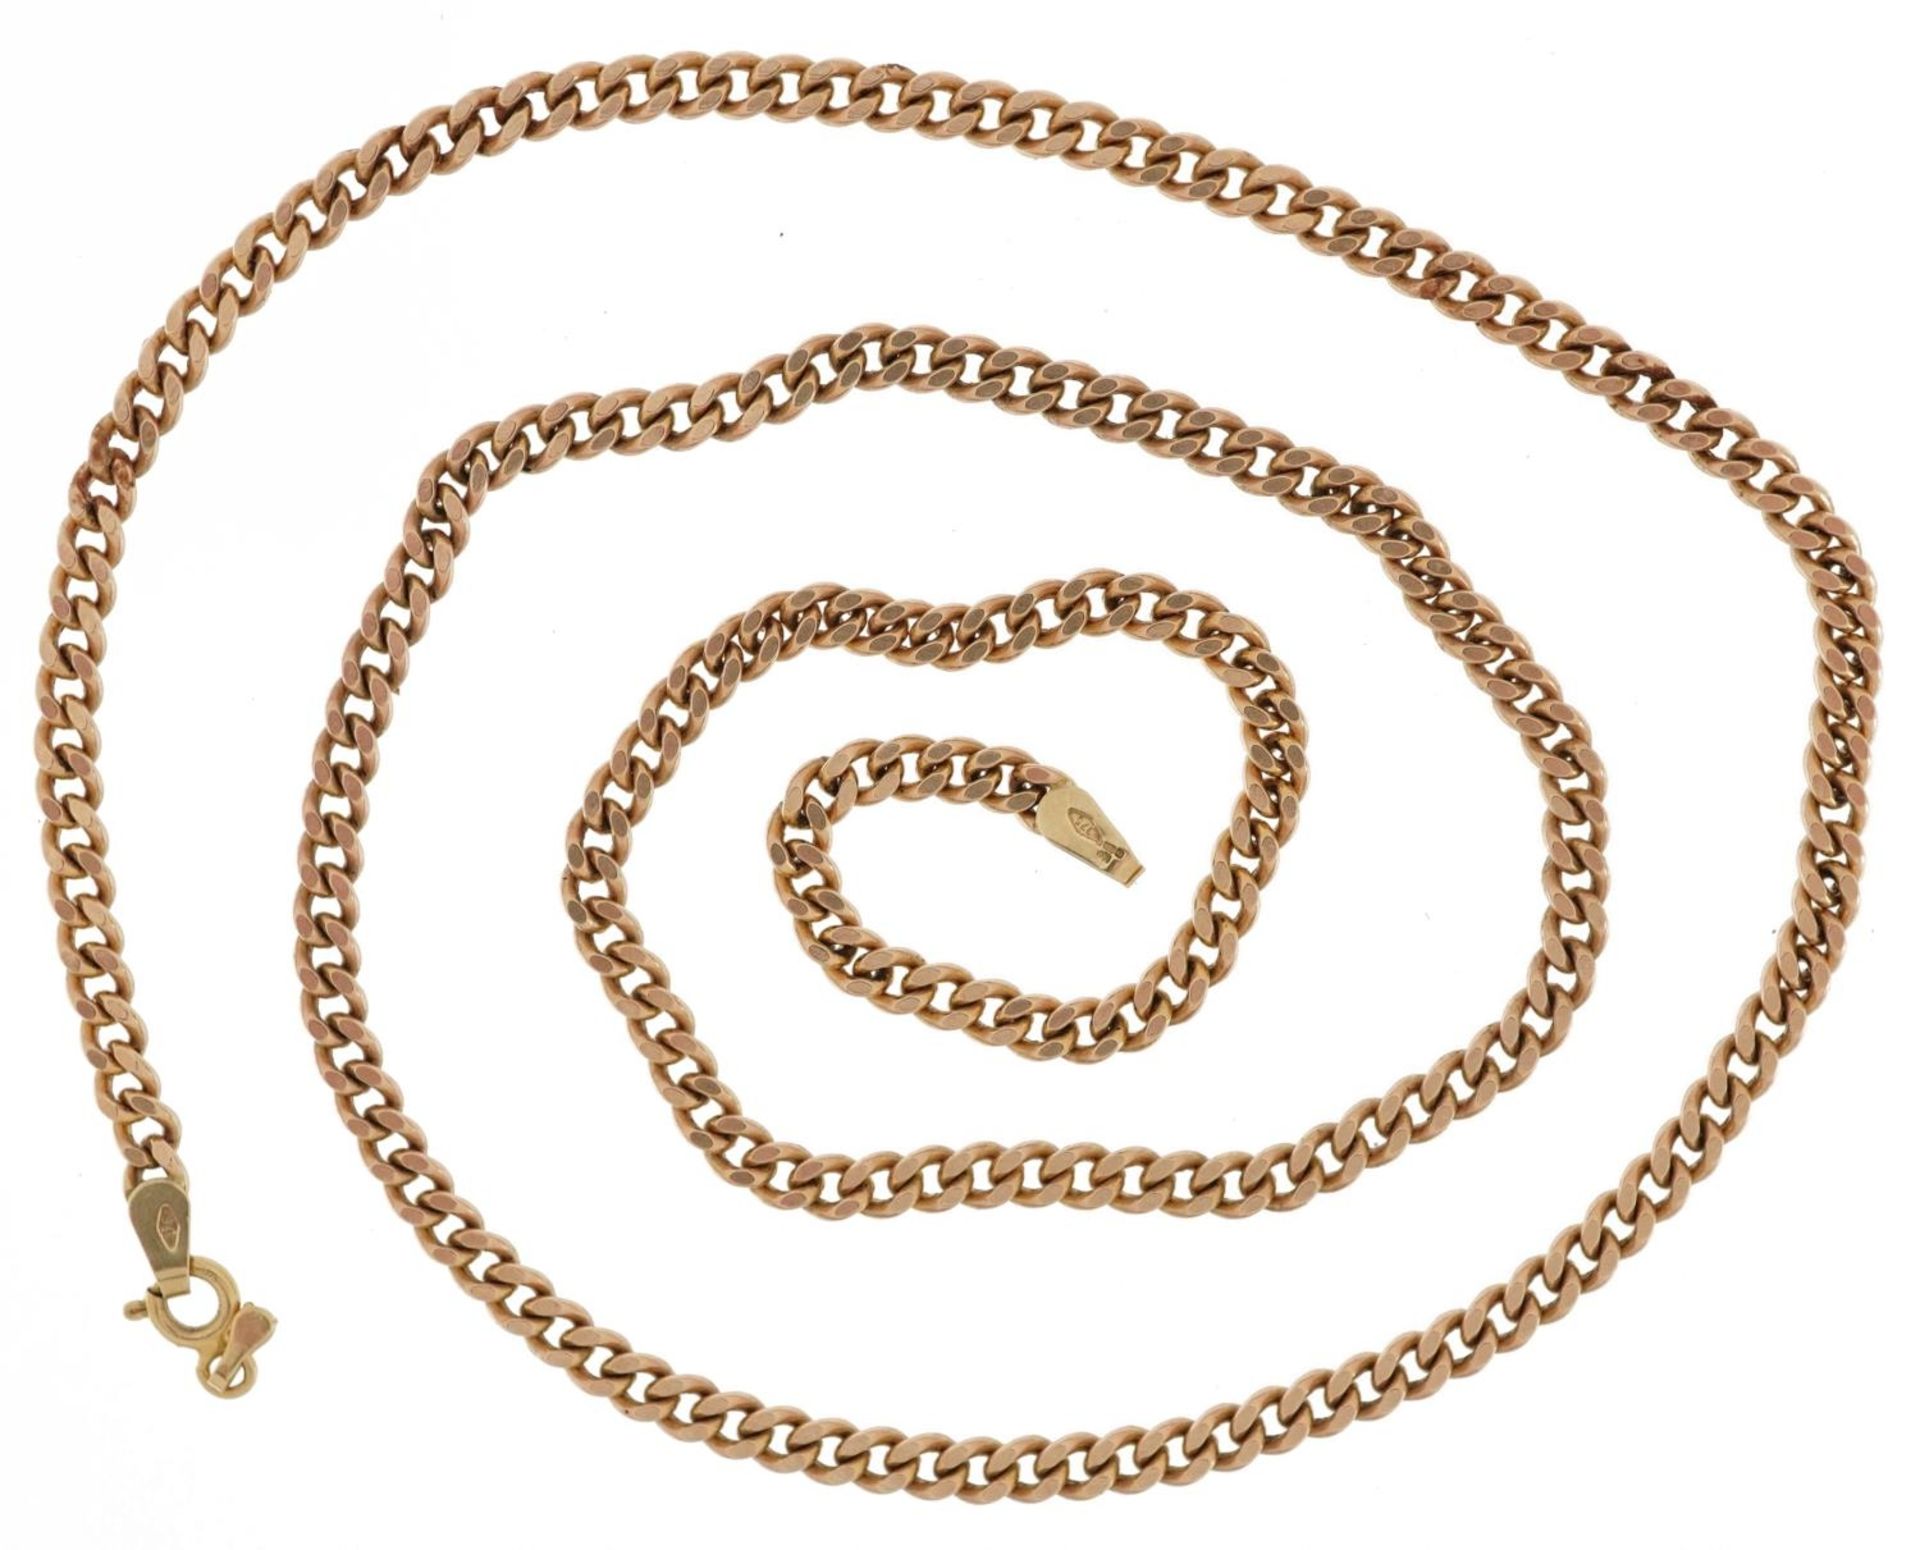 9ct gold curb link necklace, 52cm in length, 17.5g - Bild 2 aus 3